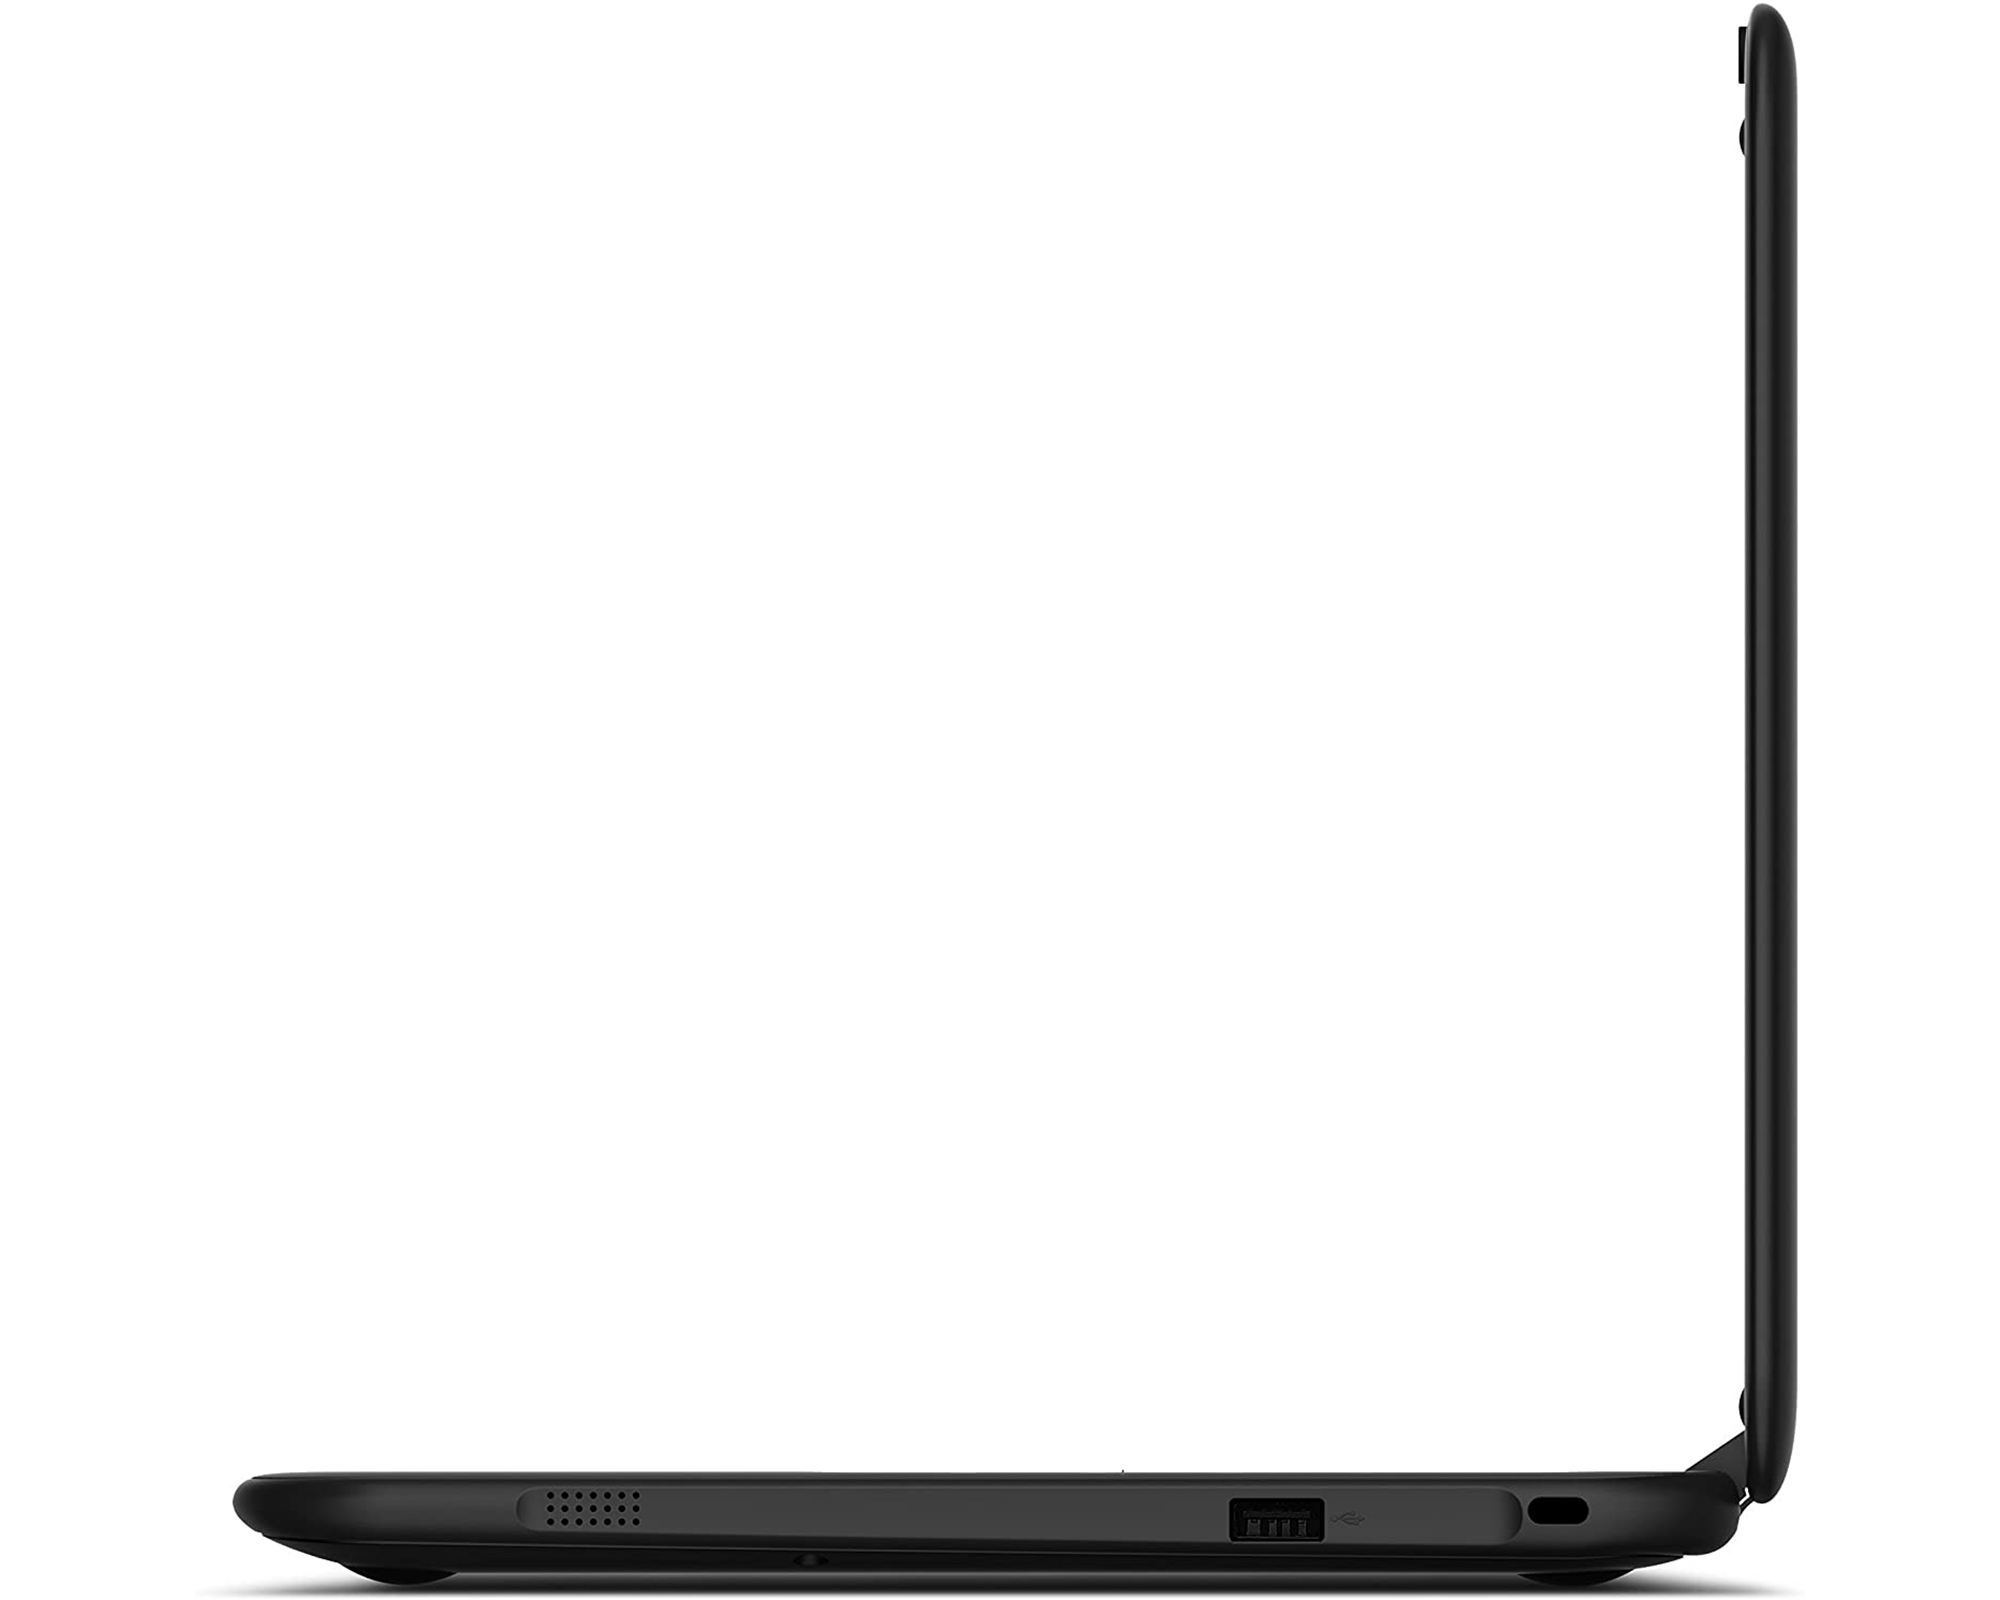 Used Lenovo N22 Series Chromebook 11.6-Inch (2GB RAM, 16GB HDD, Intel Celeron 1.60GHz) - image 10 of 10